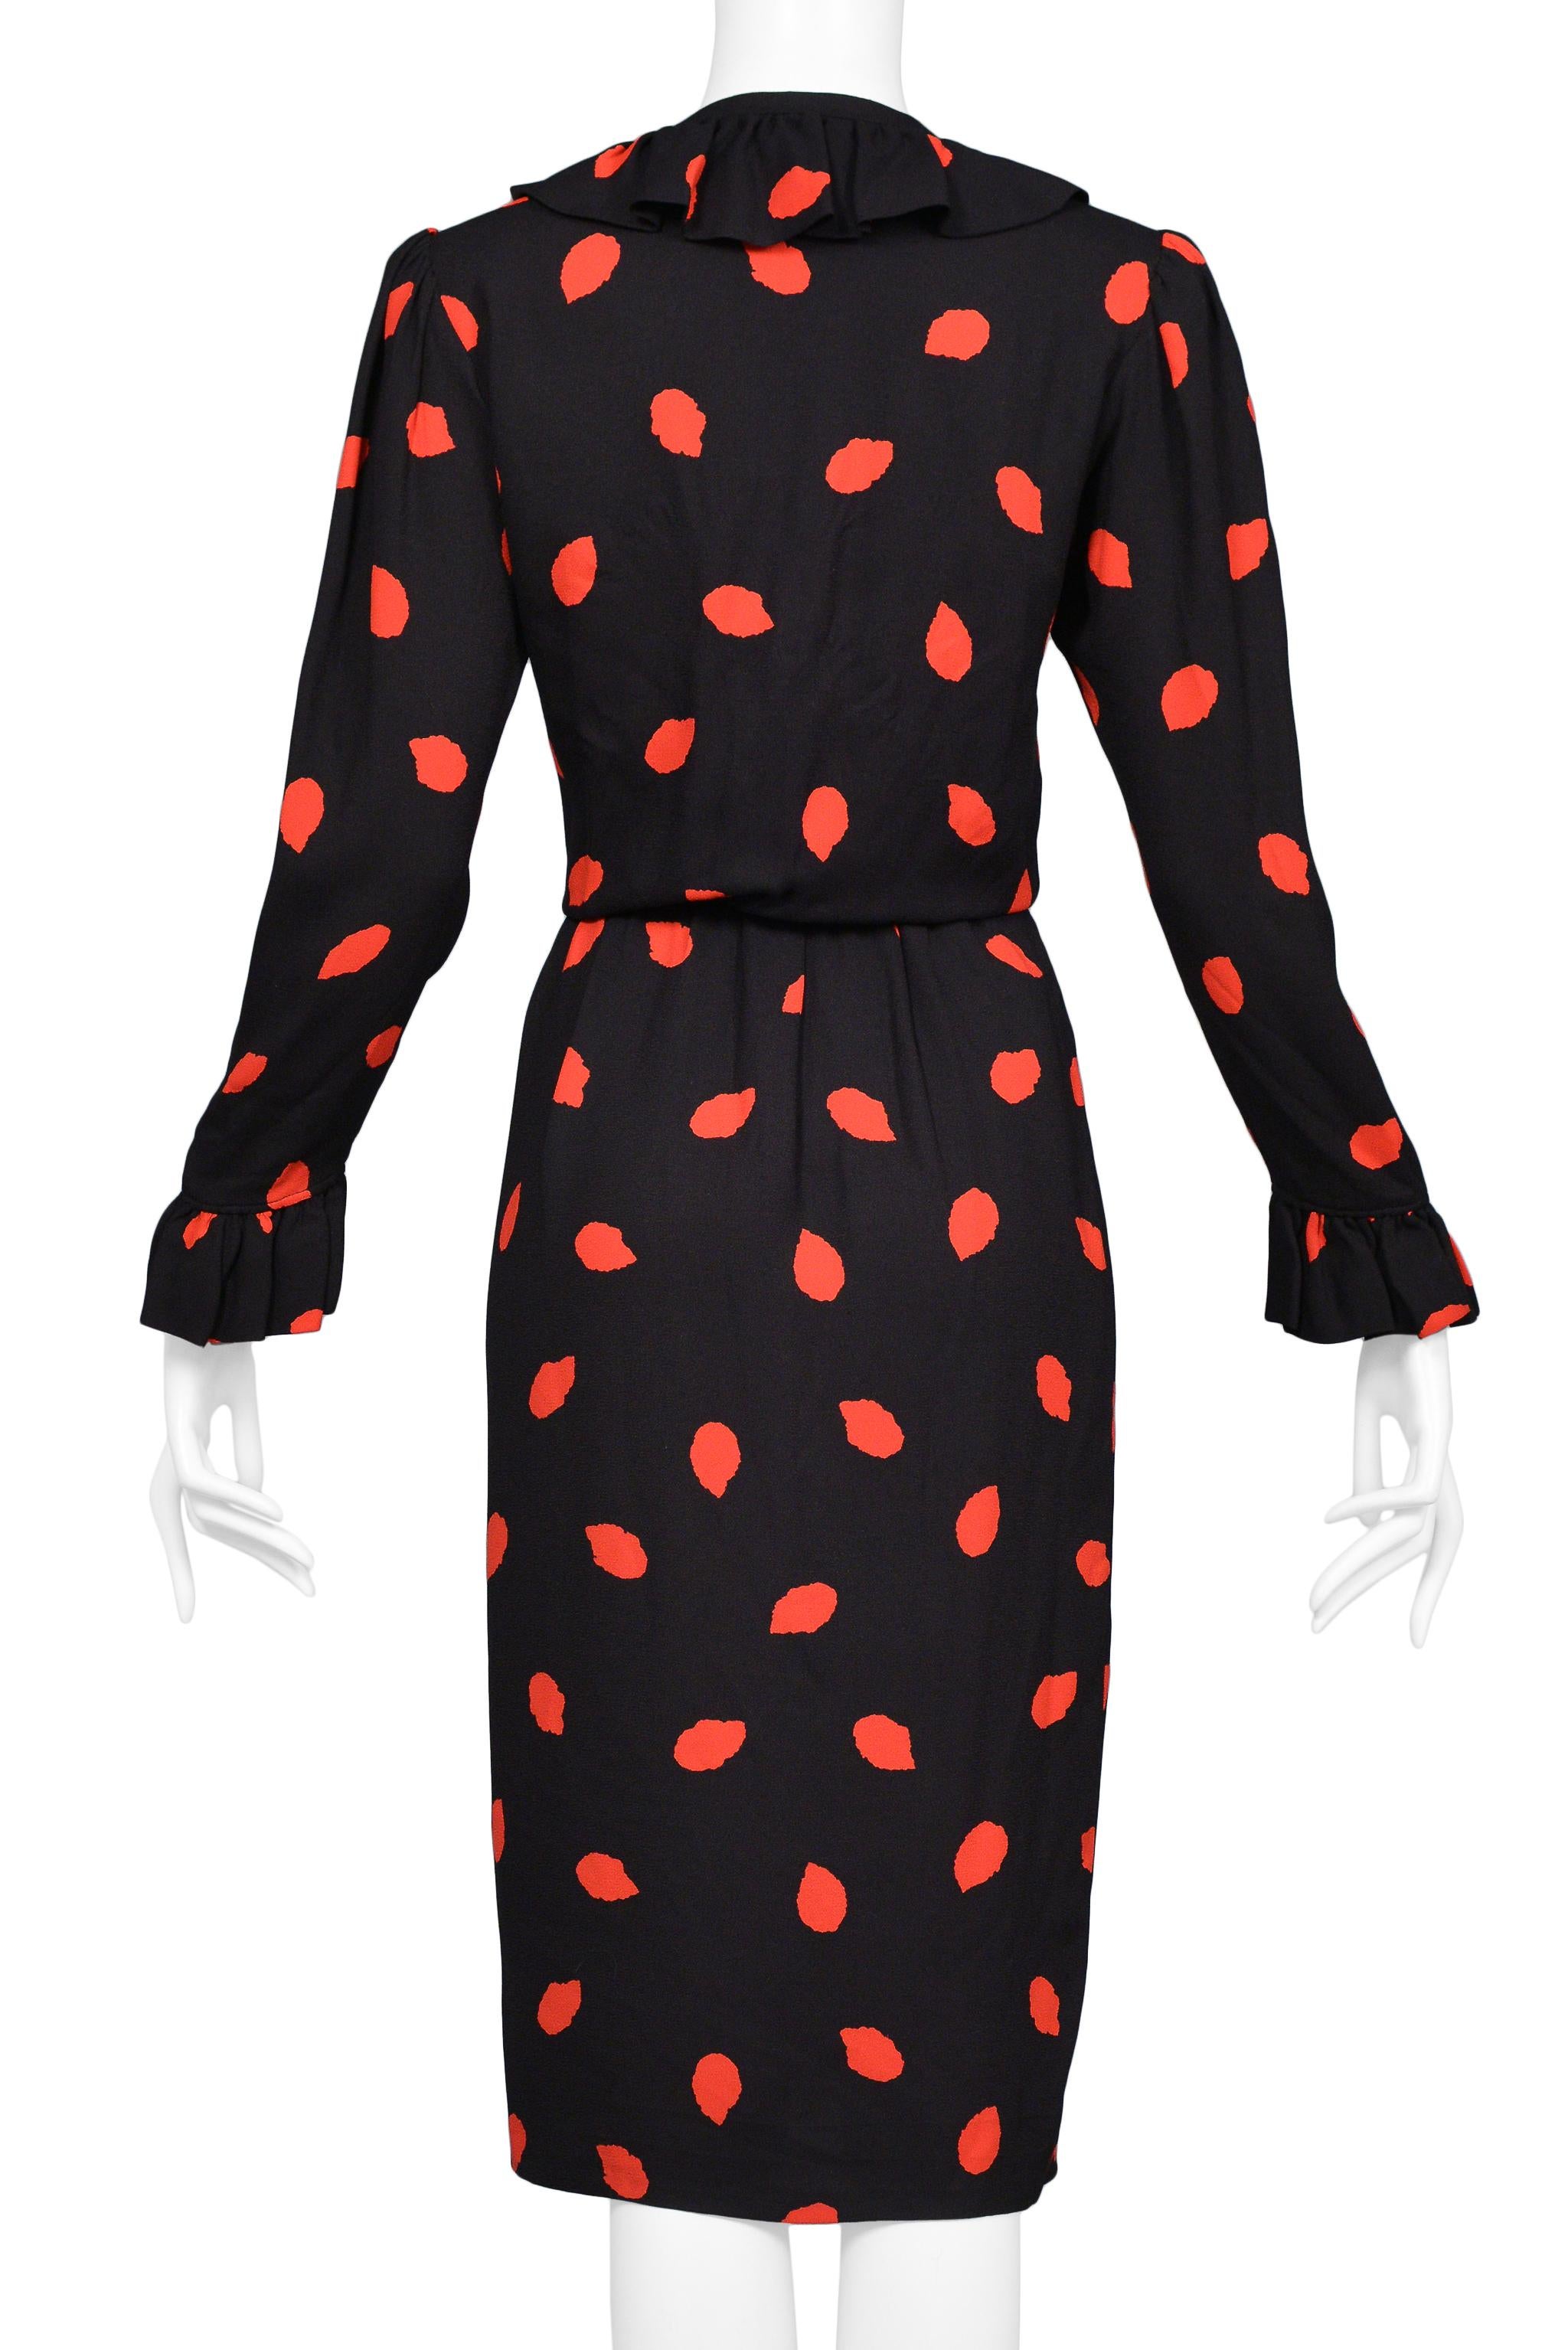 Yves Saint Laurent YSL Black & Red Print Silk Day Dress For Sale 1